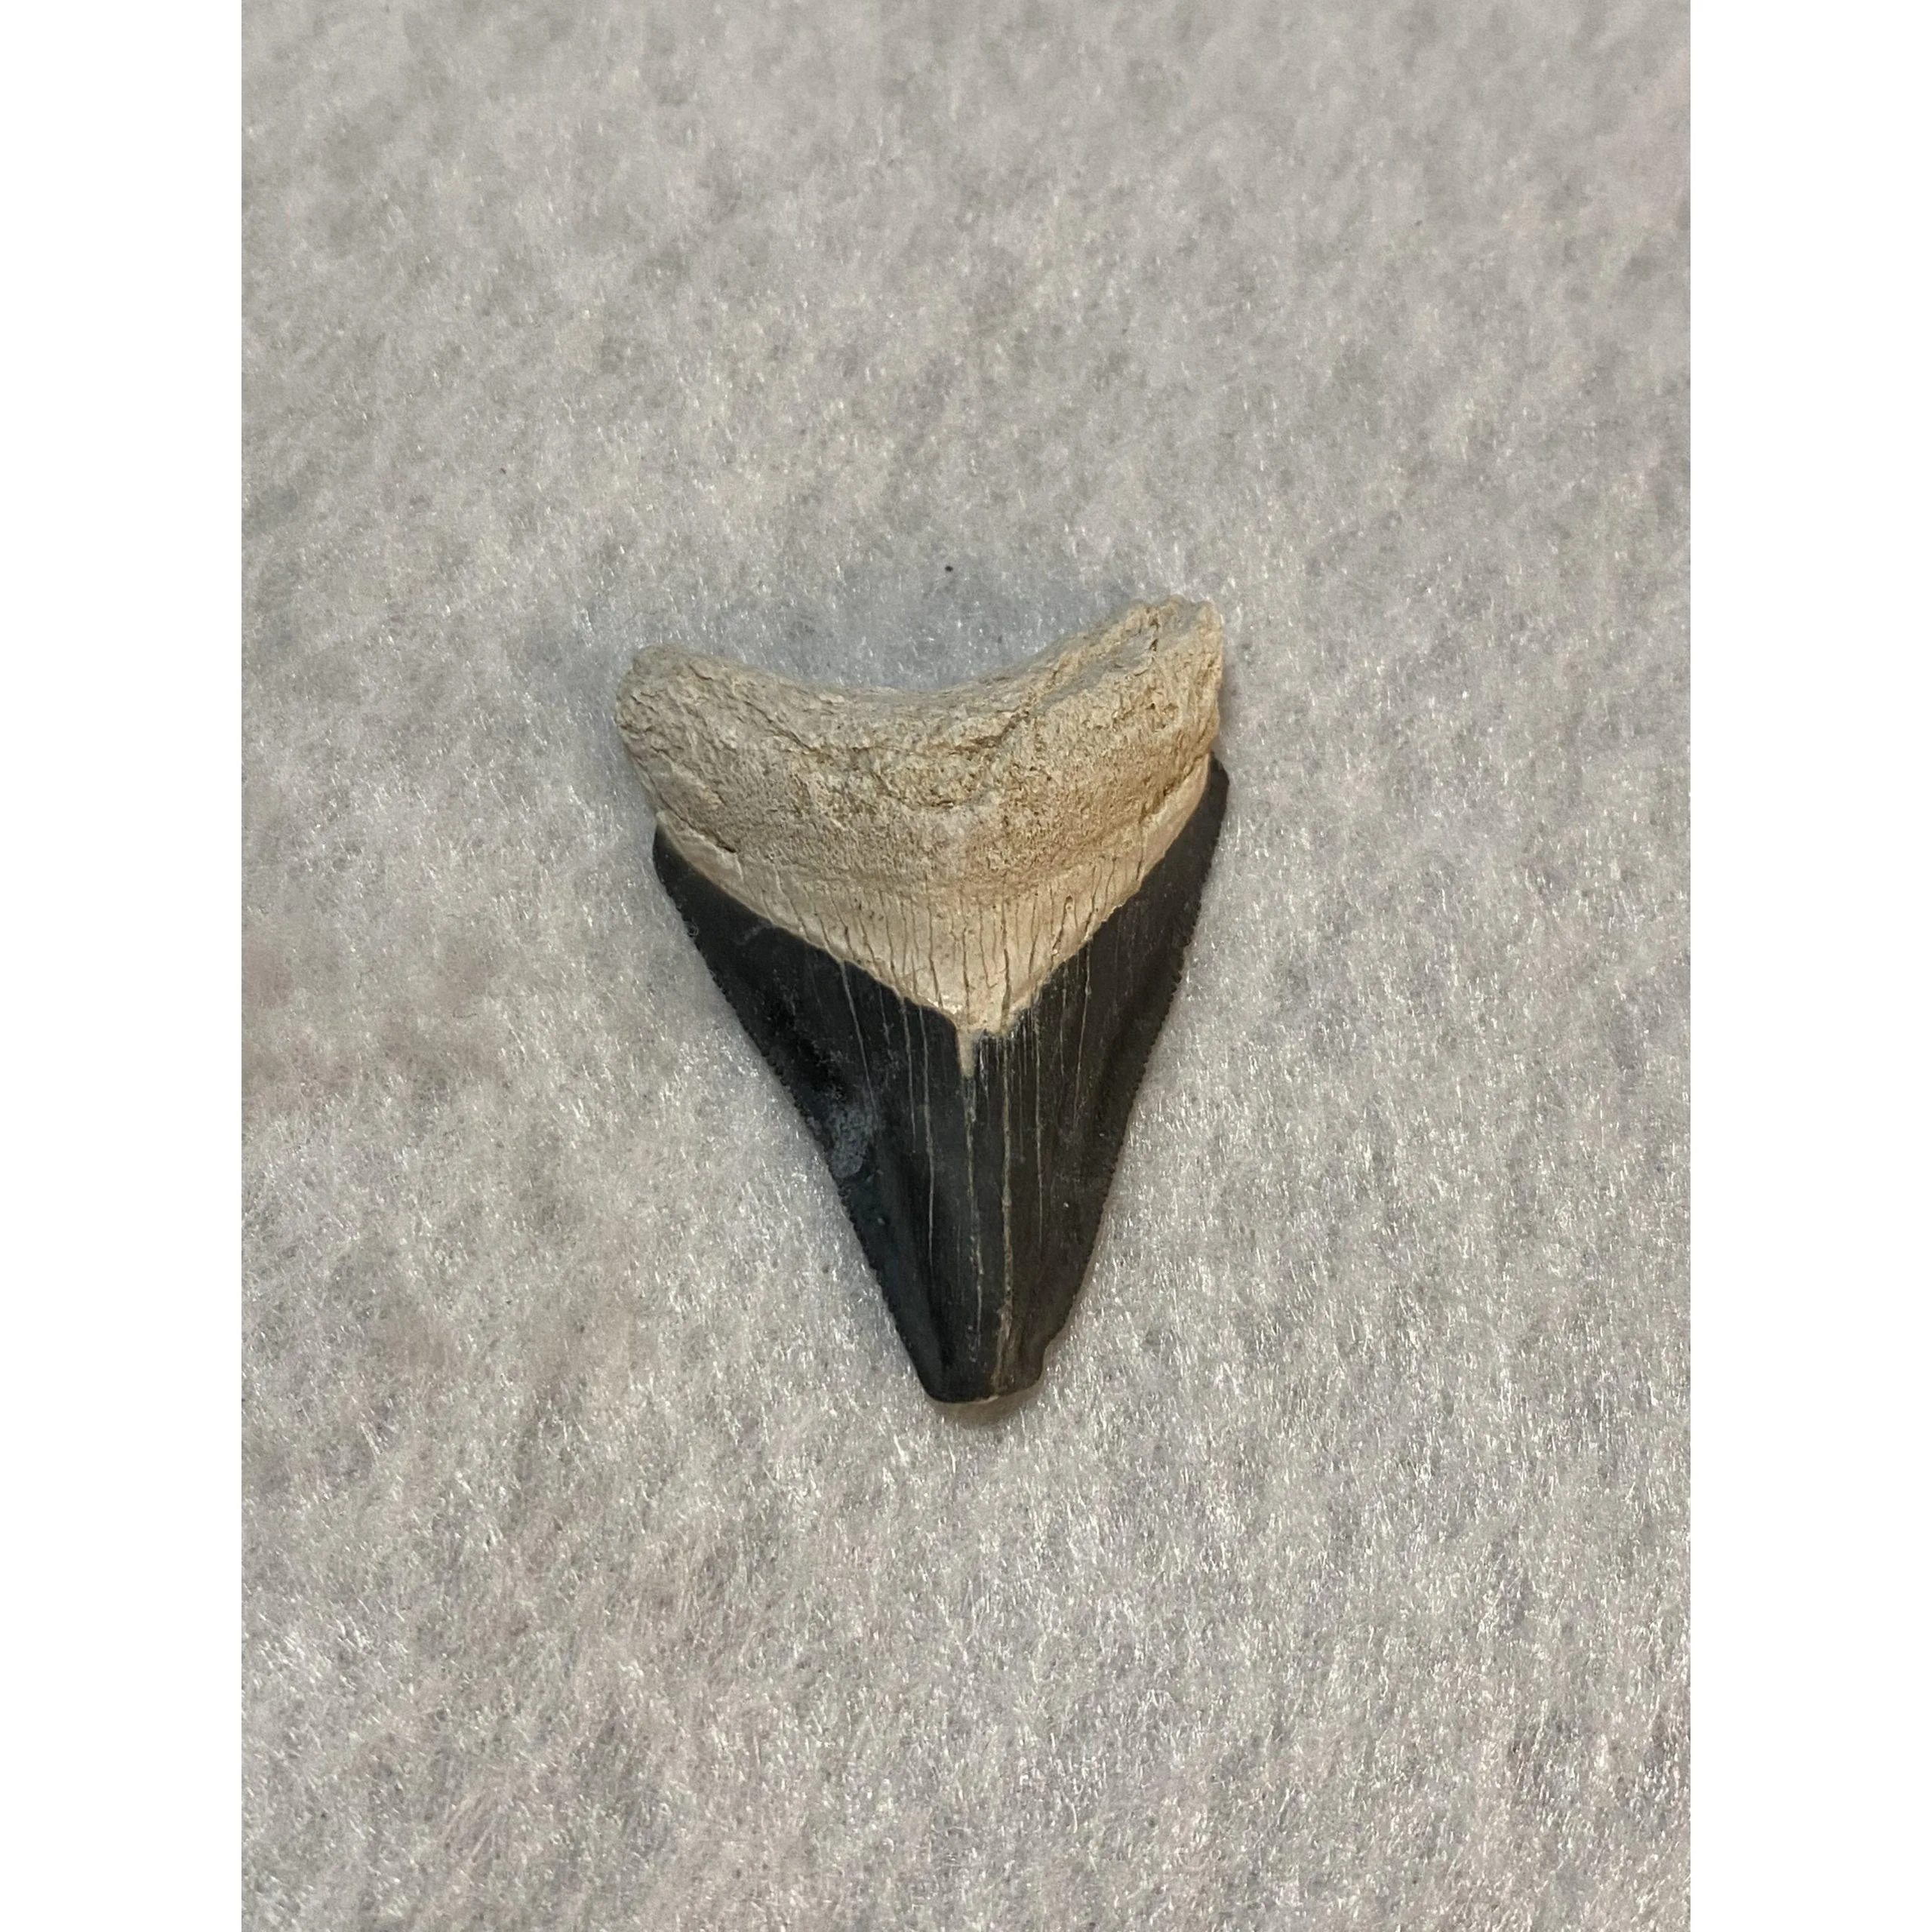 Megalodon Tooth, Bone Valley, Florida, 2.02 inch Prehistoric Online